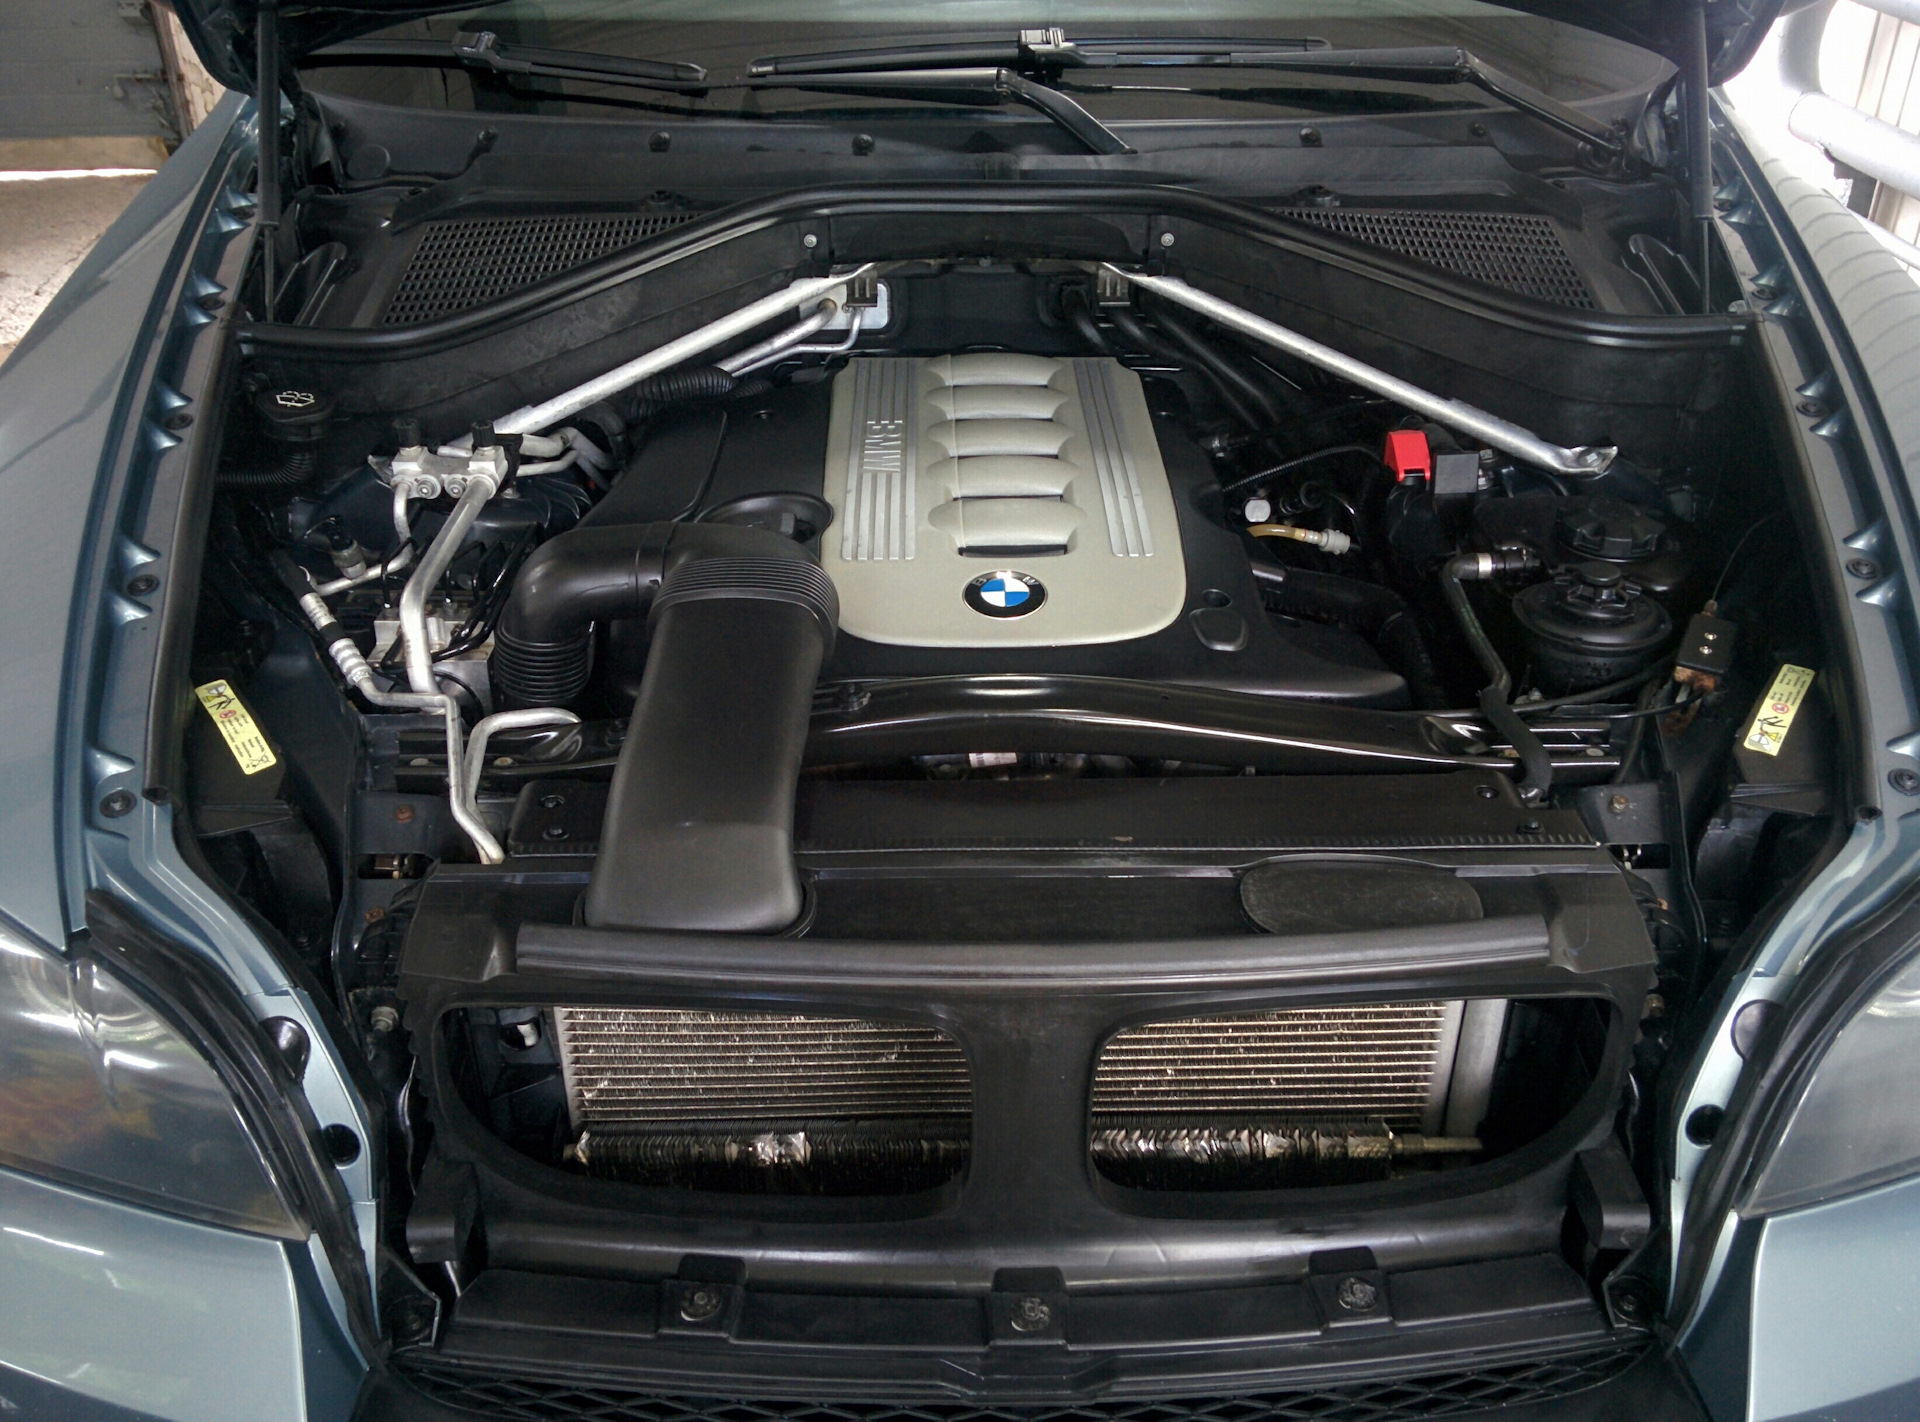 Капот х5 е70. БМВ х5 под капотом. BMW e70 m57 двигатель. BMW x5 e70 моторный отсек. БМВ х5 е70 3.0 дизель.